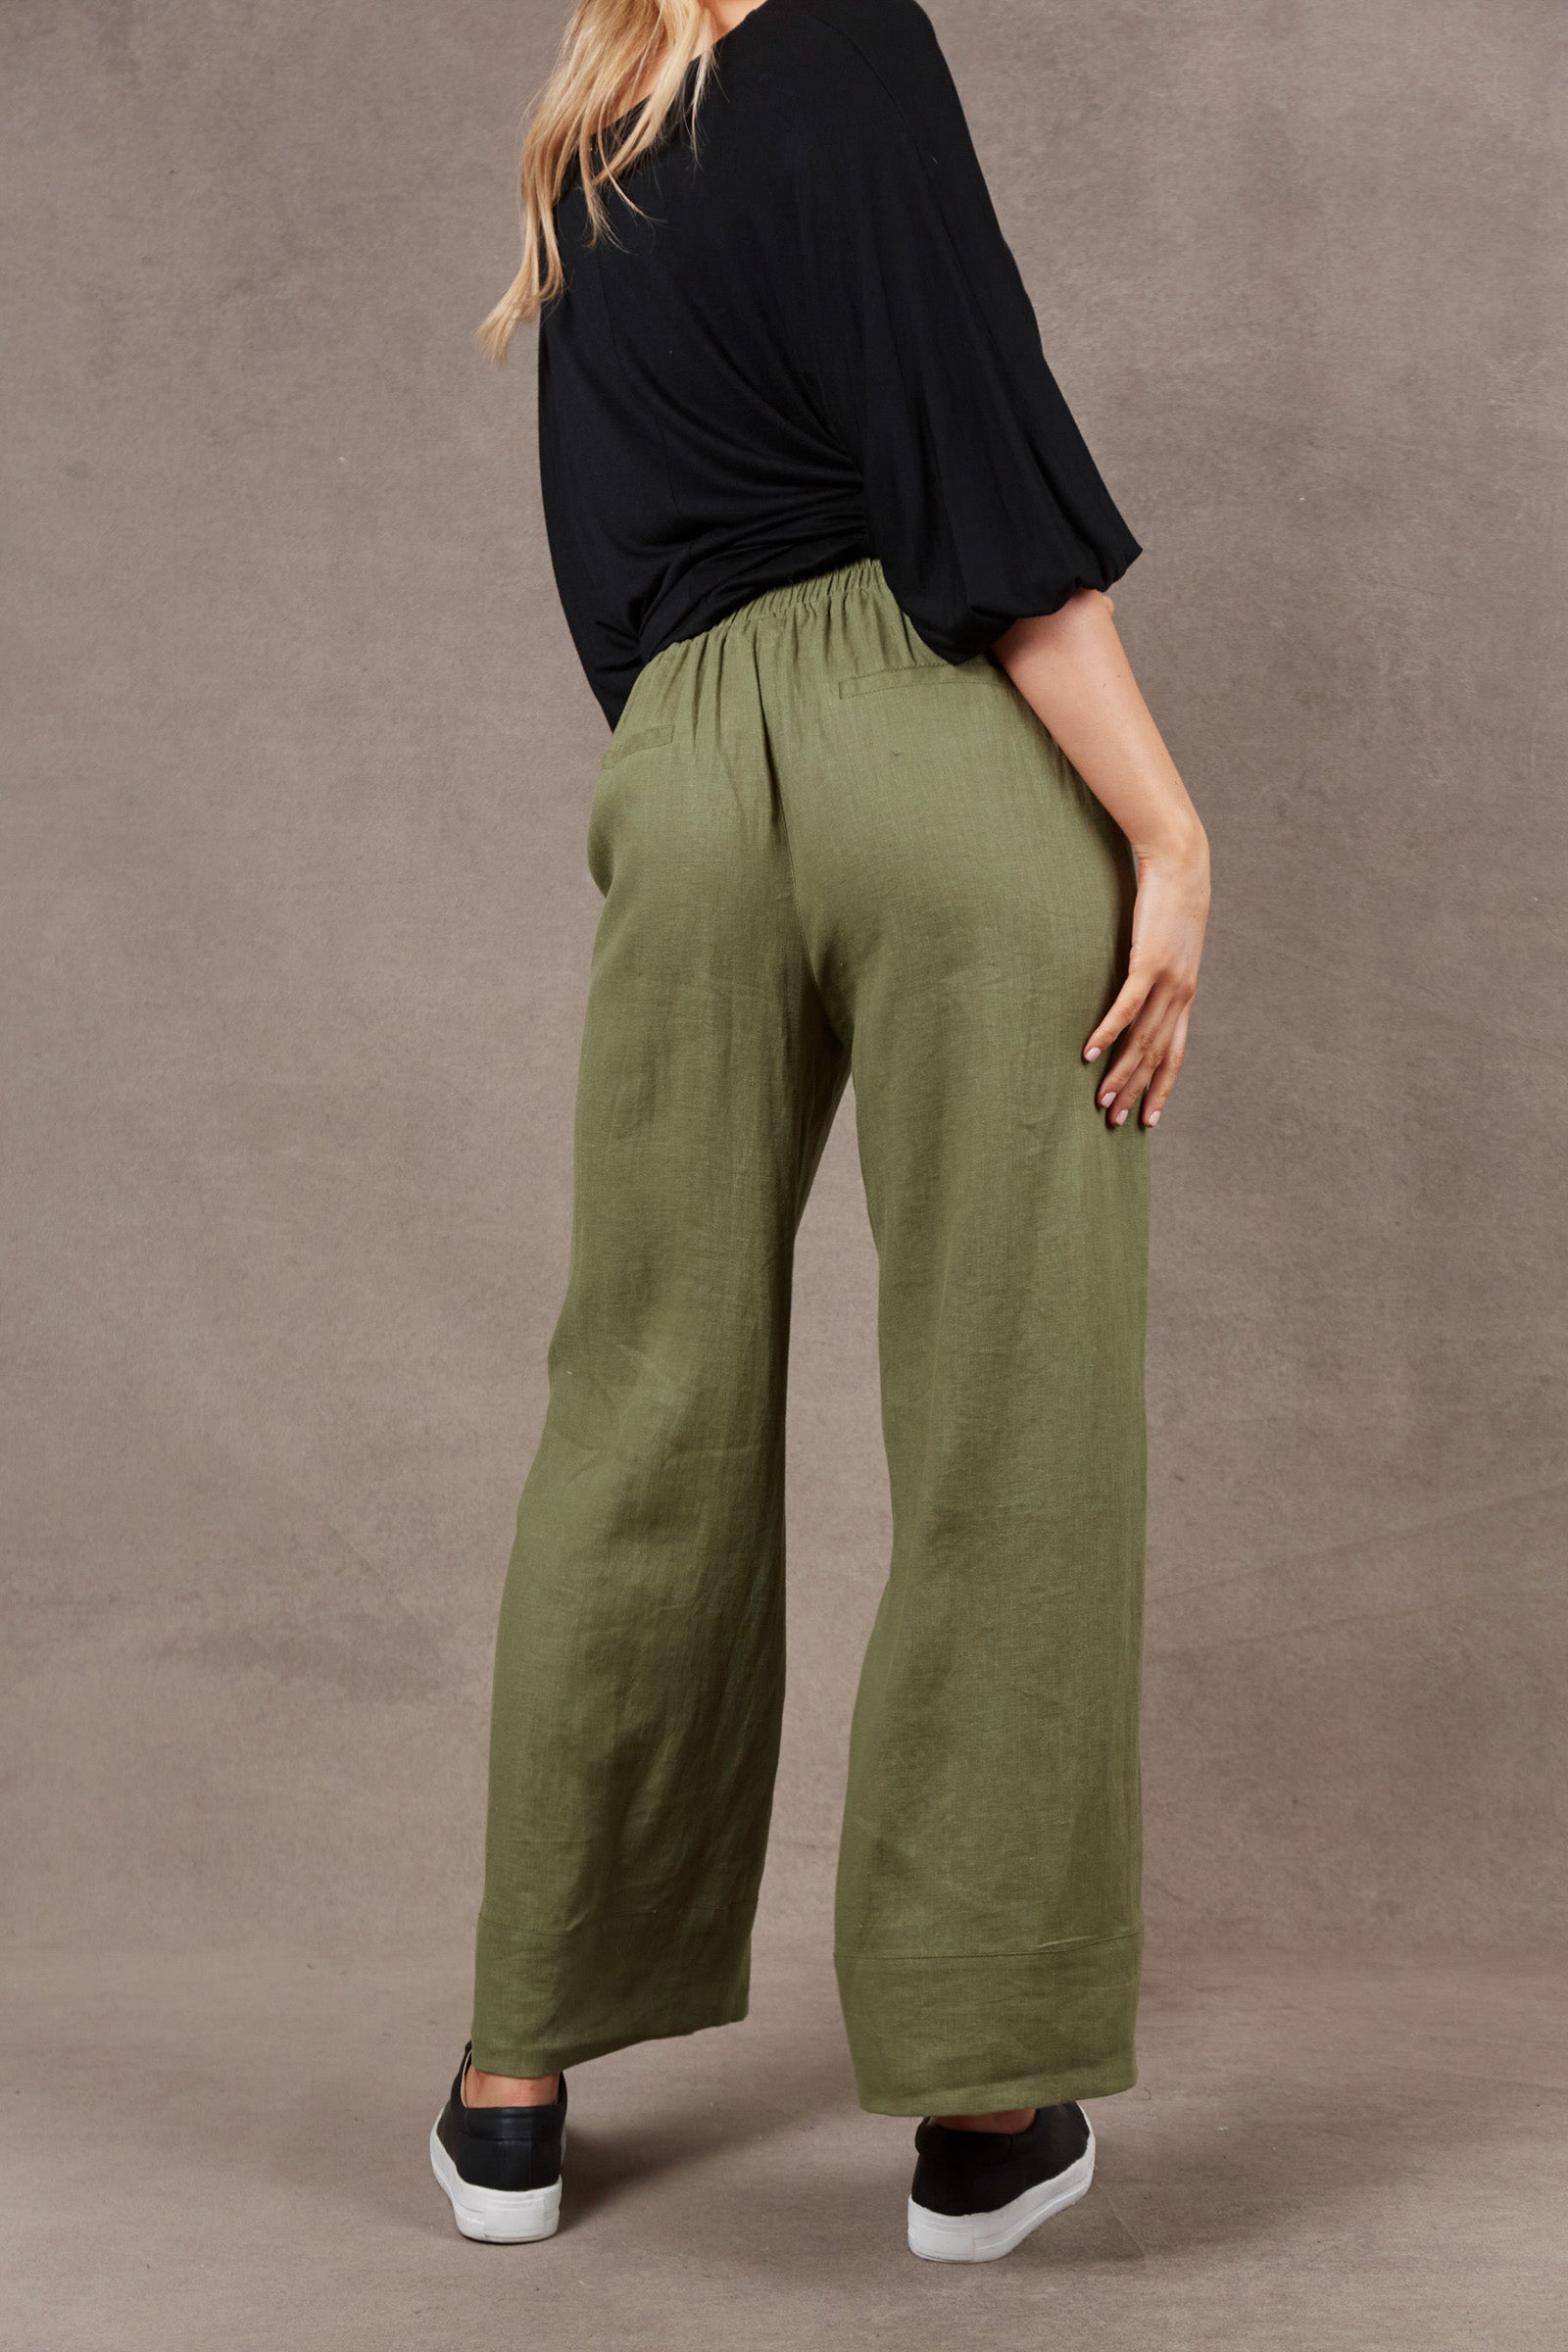 Nama Pant - Fern - eb&ive Clothing - Pant Relaxed Linen